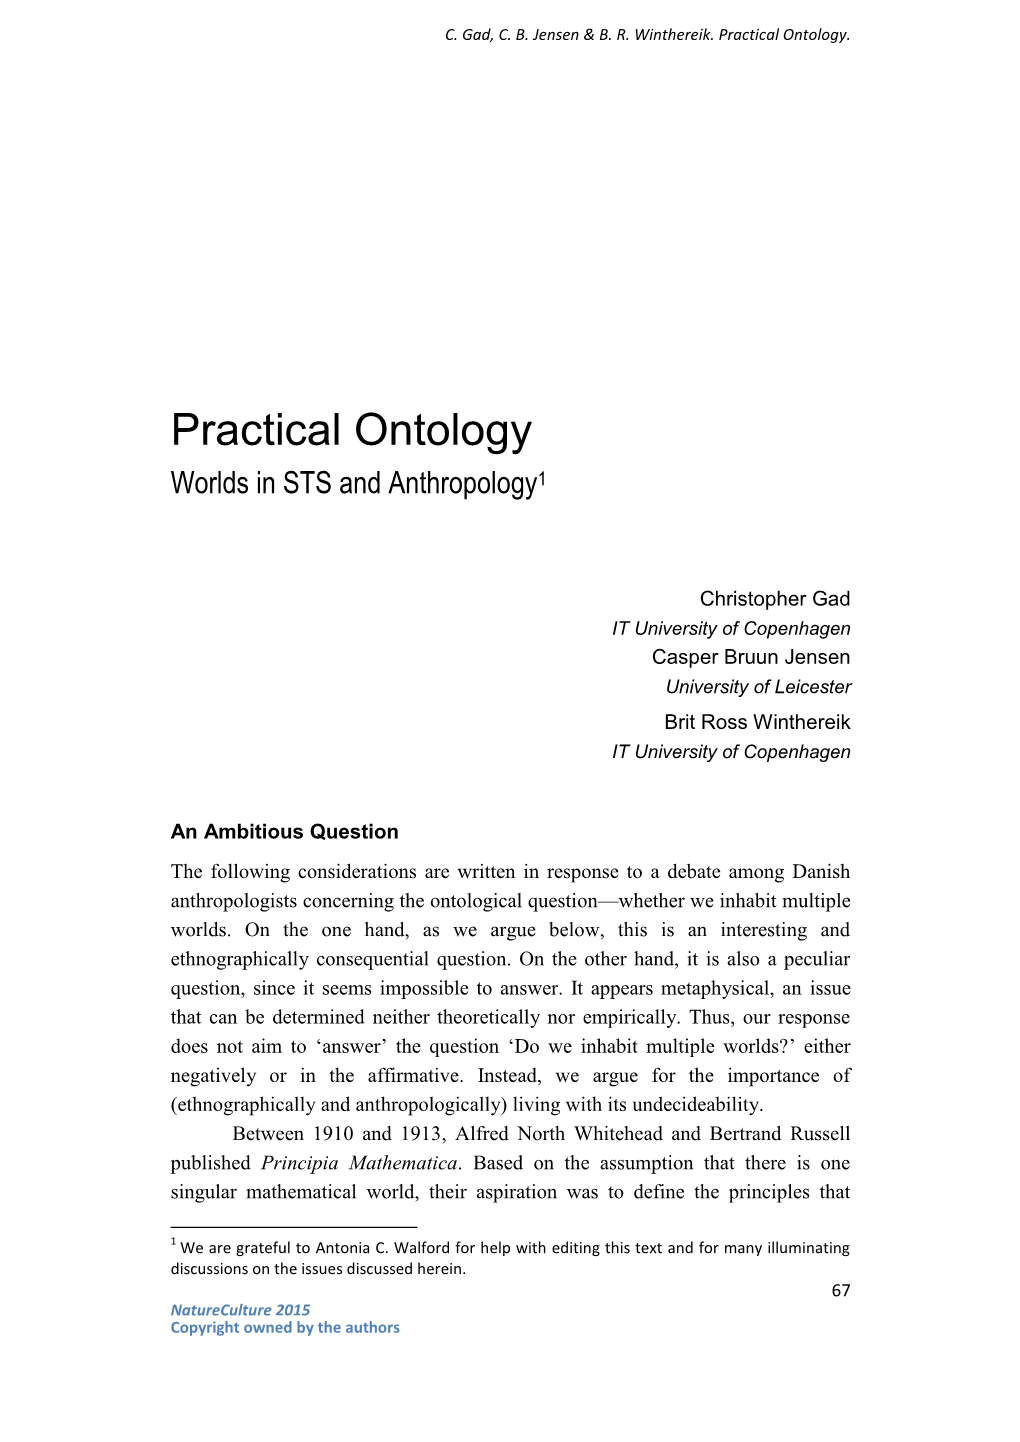 Practical Ontology